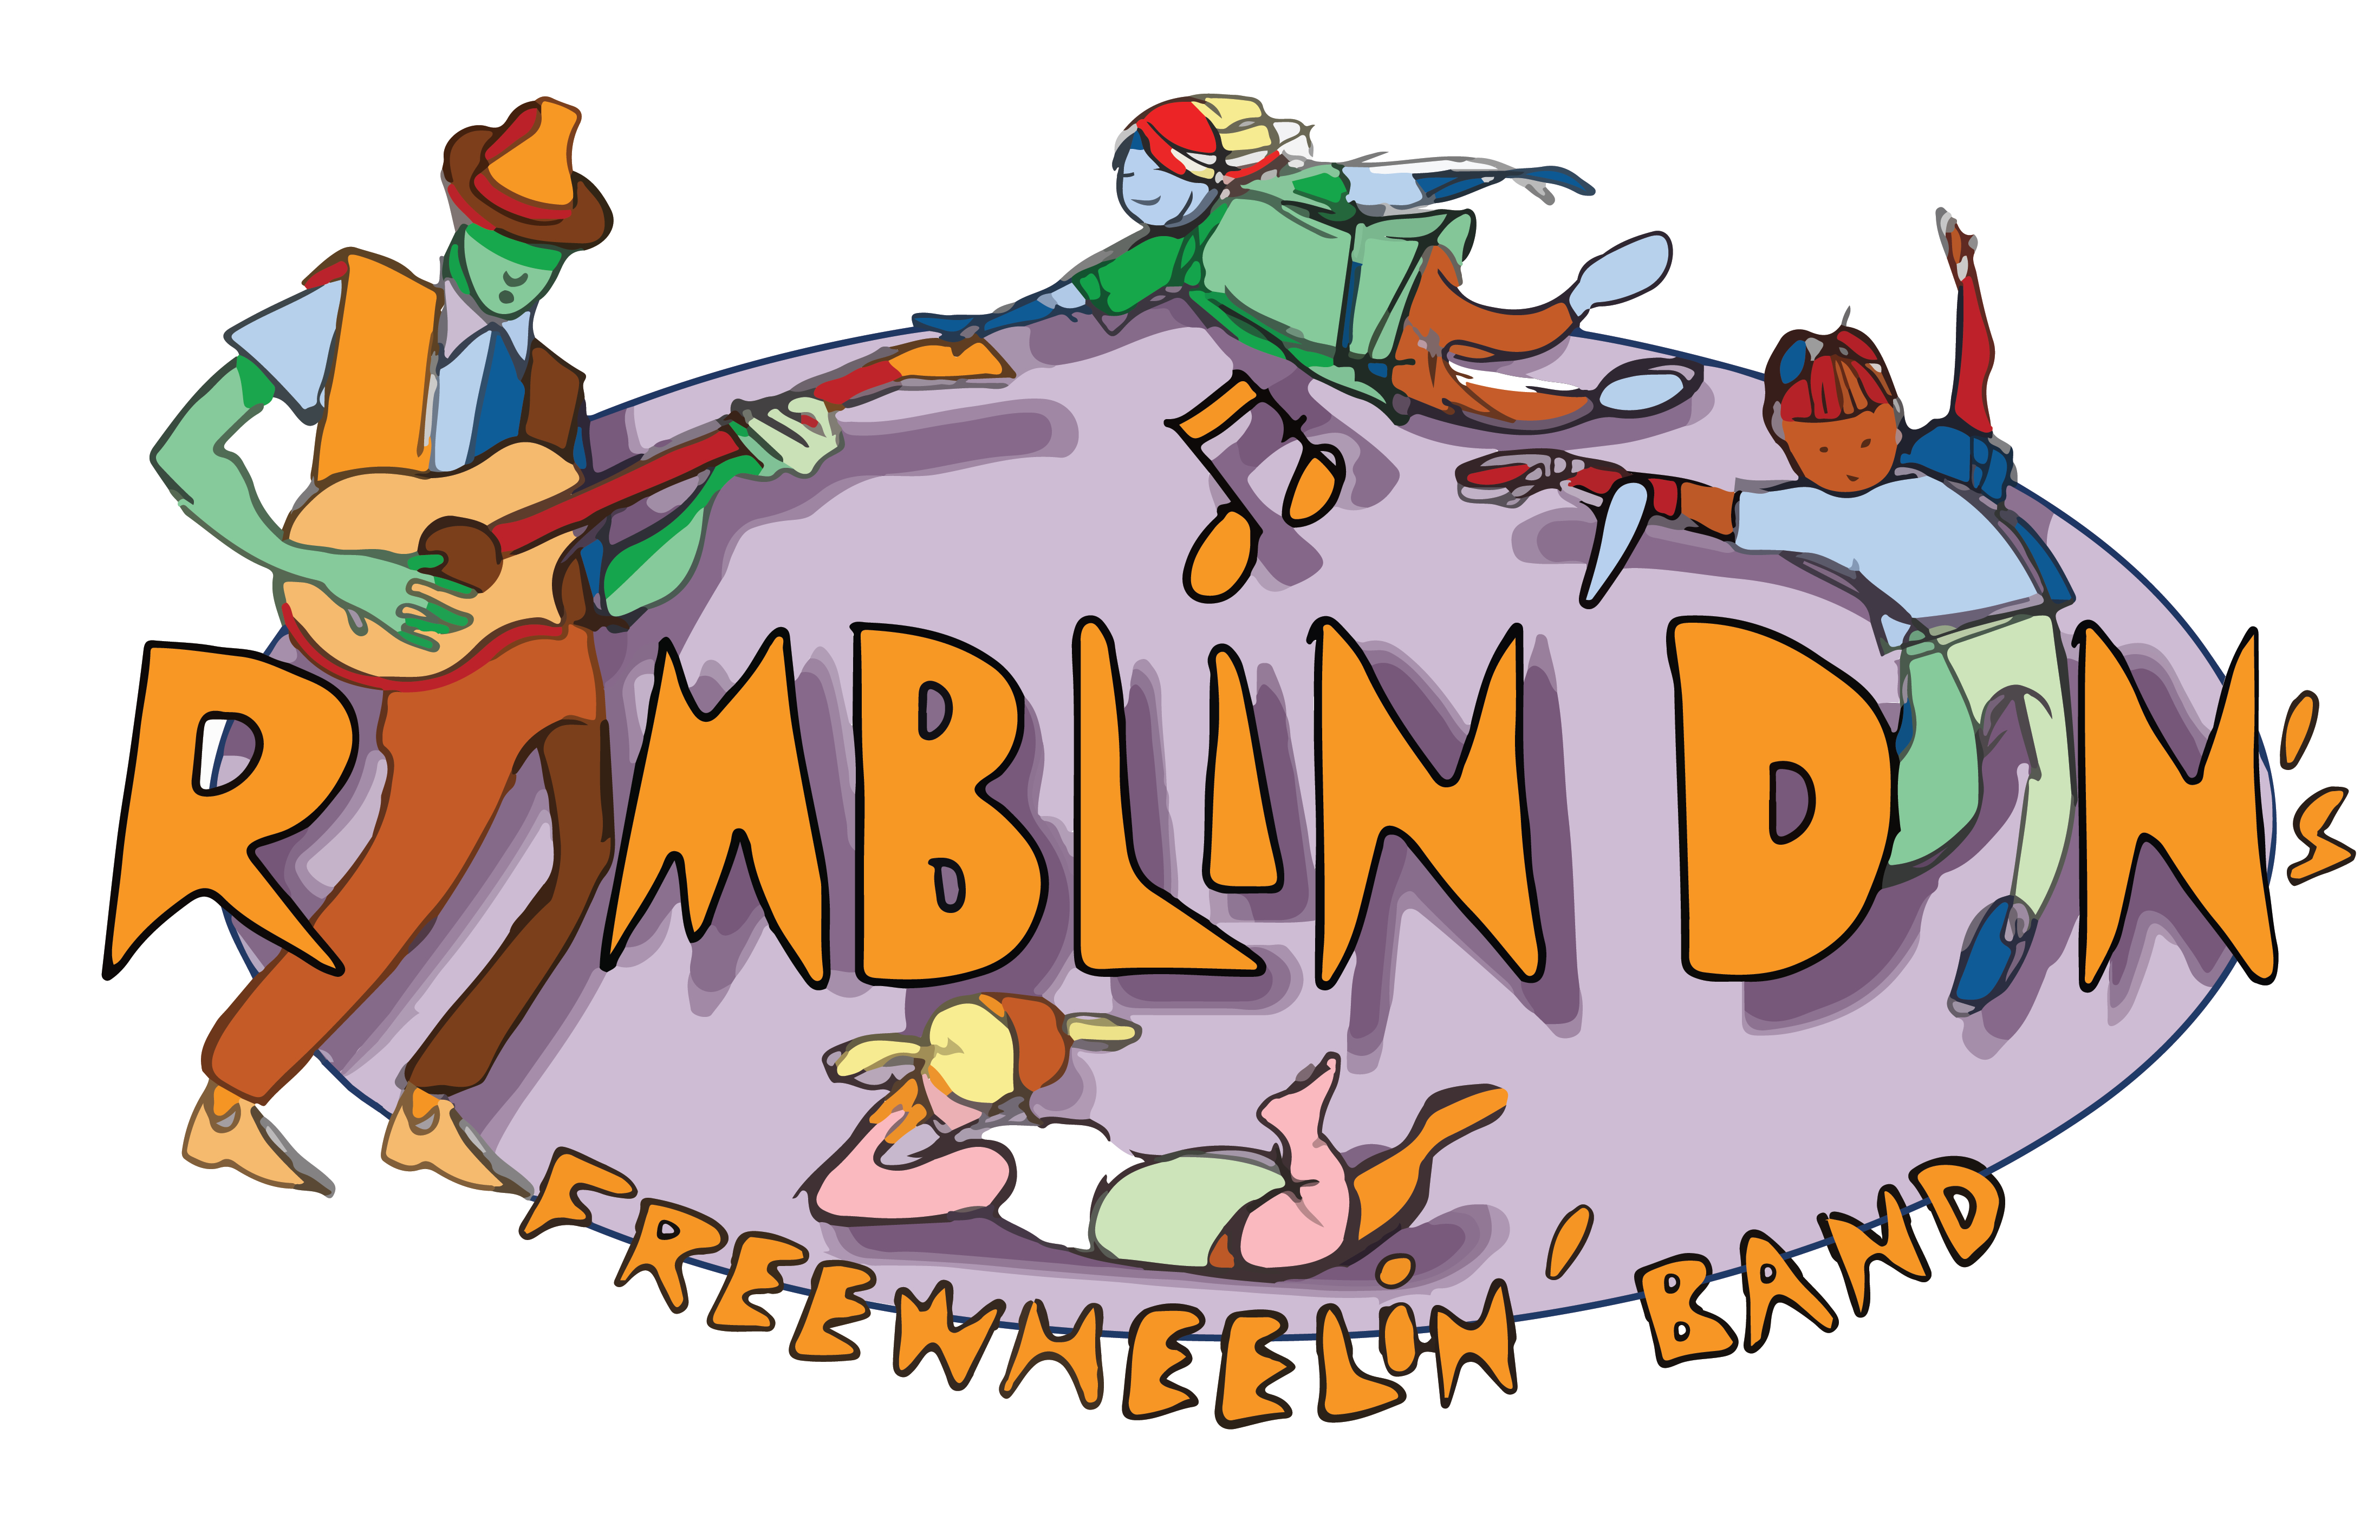 Ramblin Dan's Freewheelin' Band